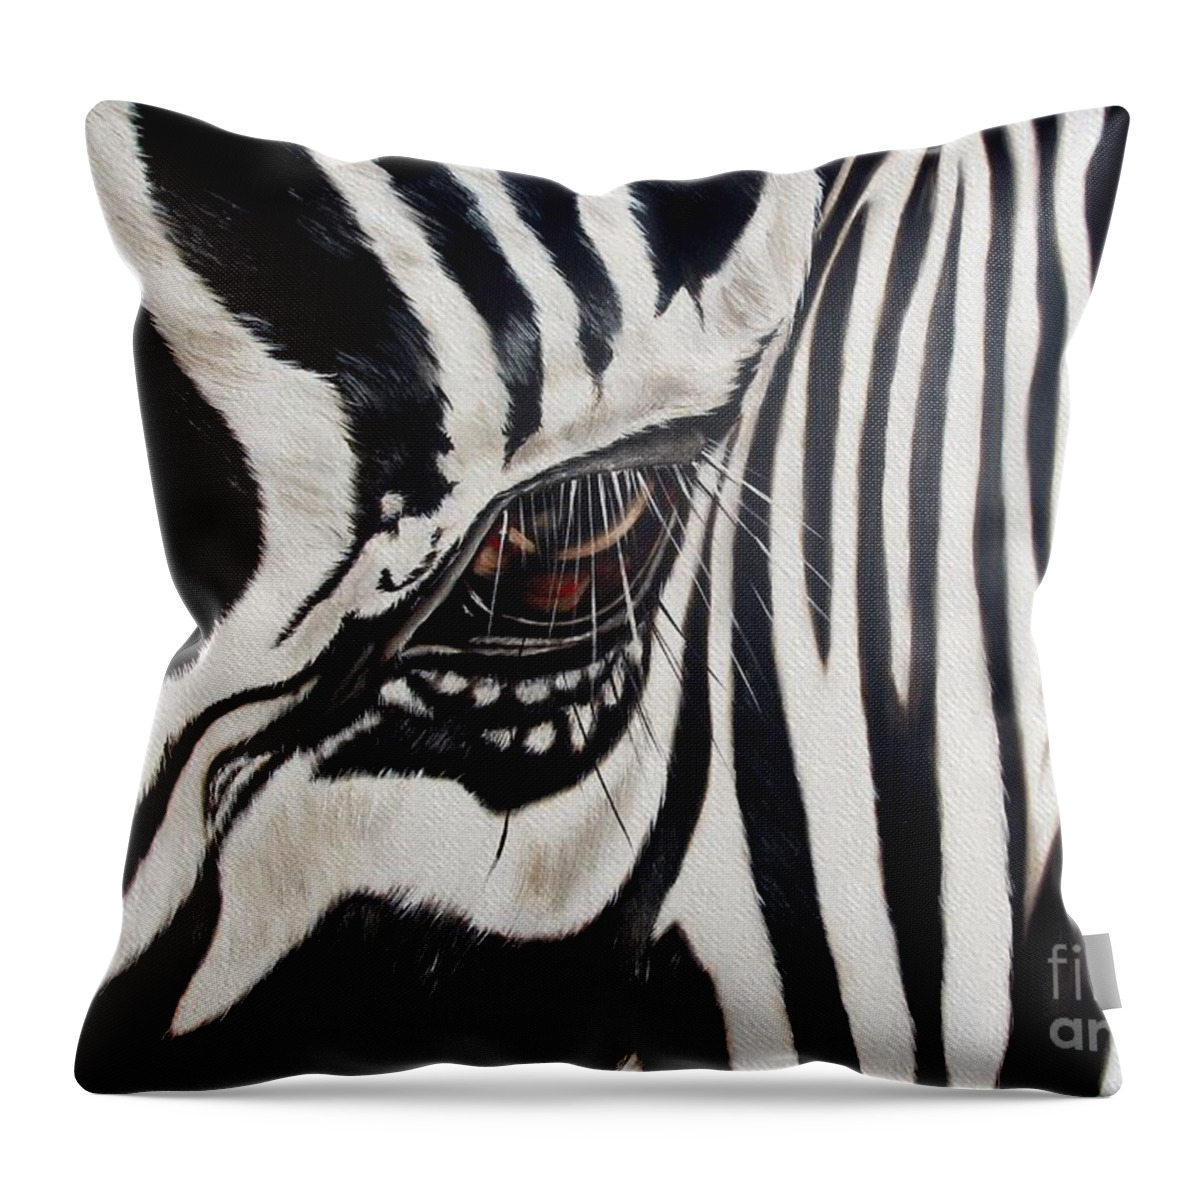 Zebra Throw Pillow featuring the painting Zebra Eye by Ilse Kleyn